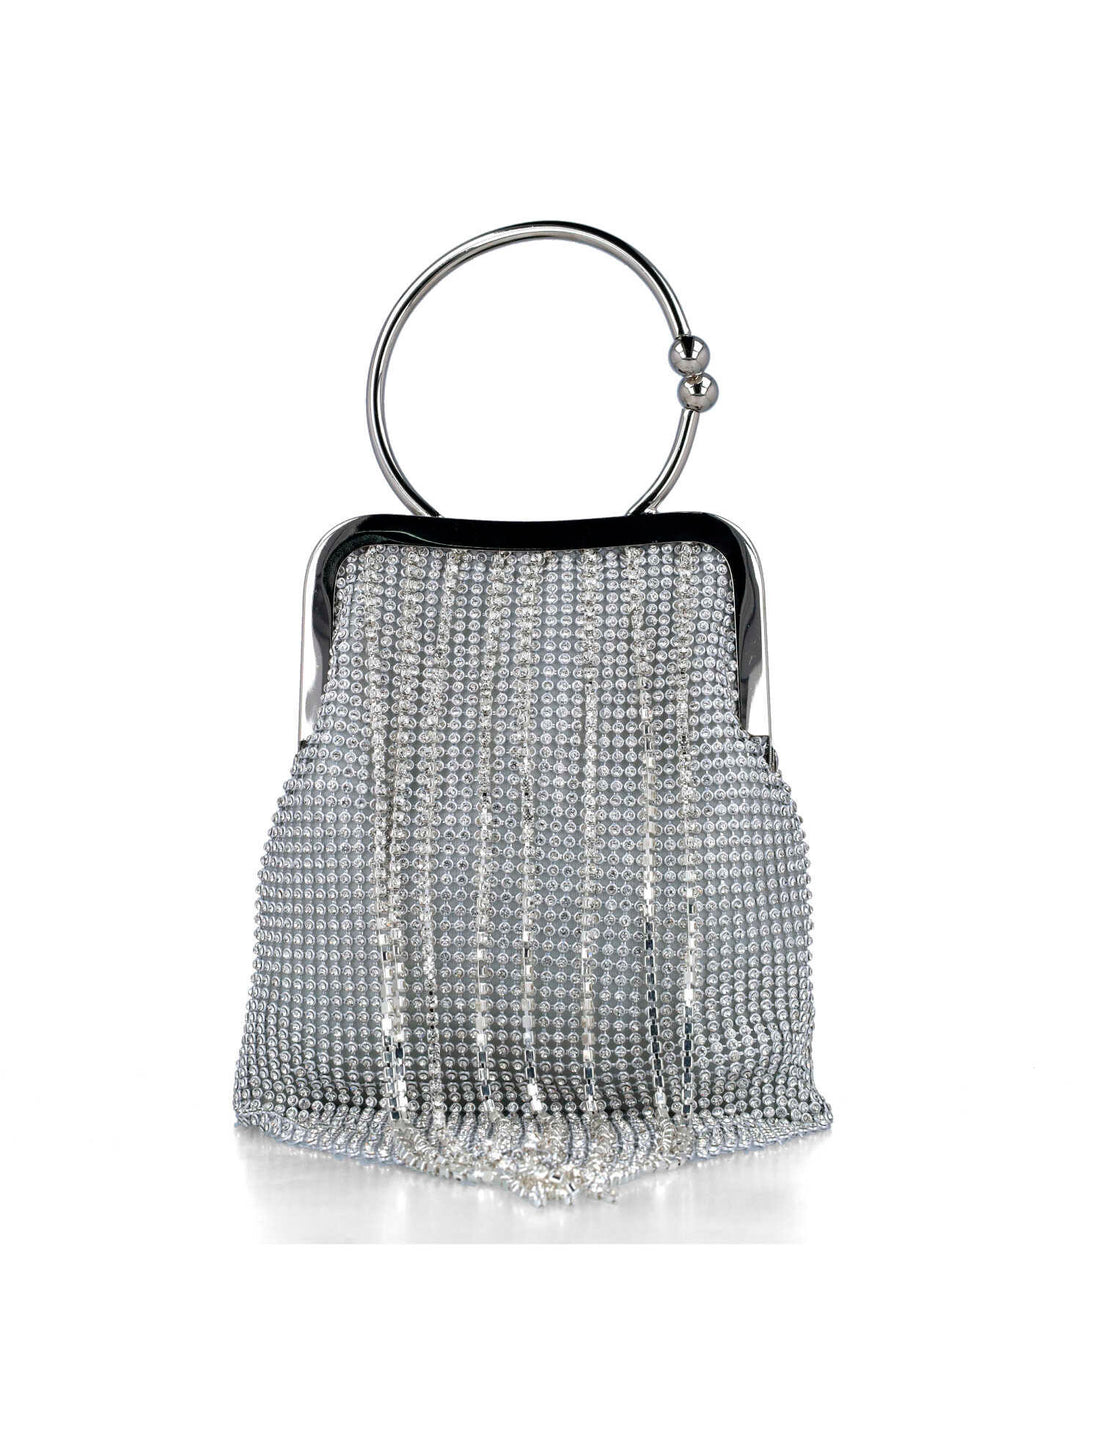 Embellished Handbag With Round Handles_85687_09_01